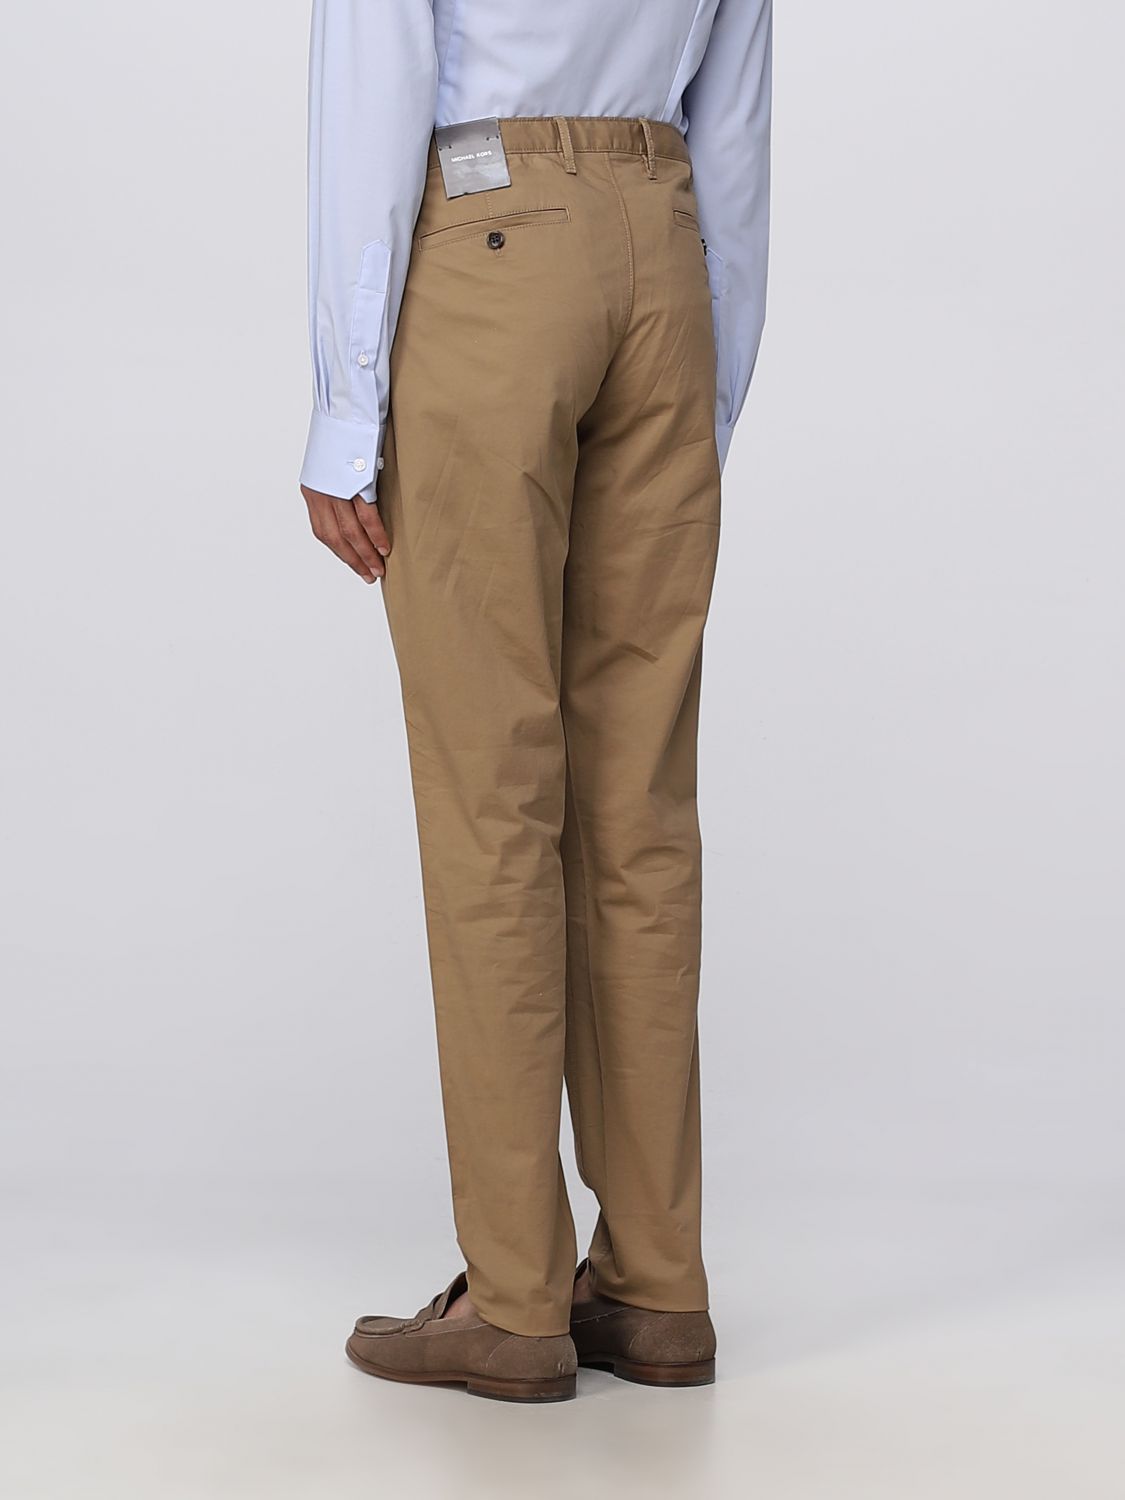 MICHAEL KORS trousers for men  Black  Michael Kors trousers CS93CTJ4JJ  online on GIGLIOCOM